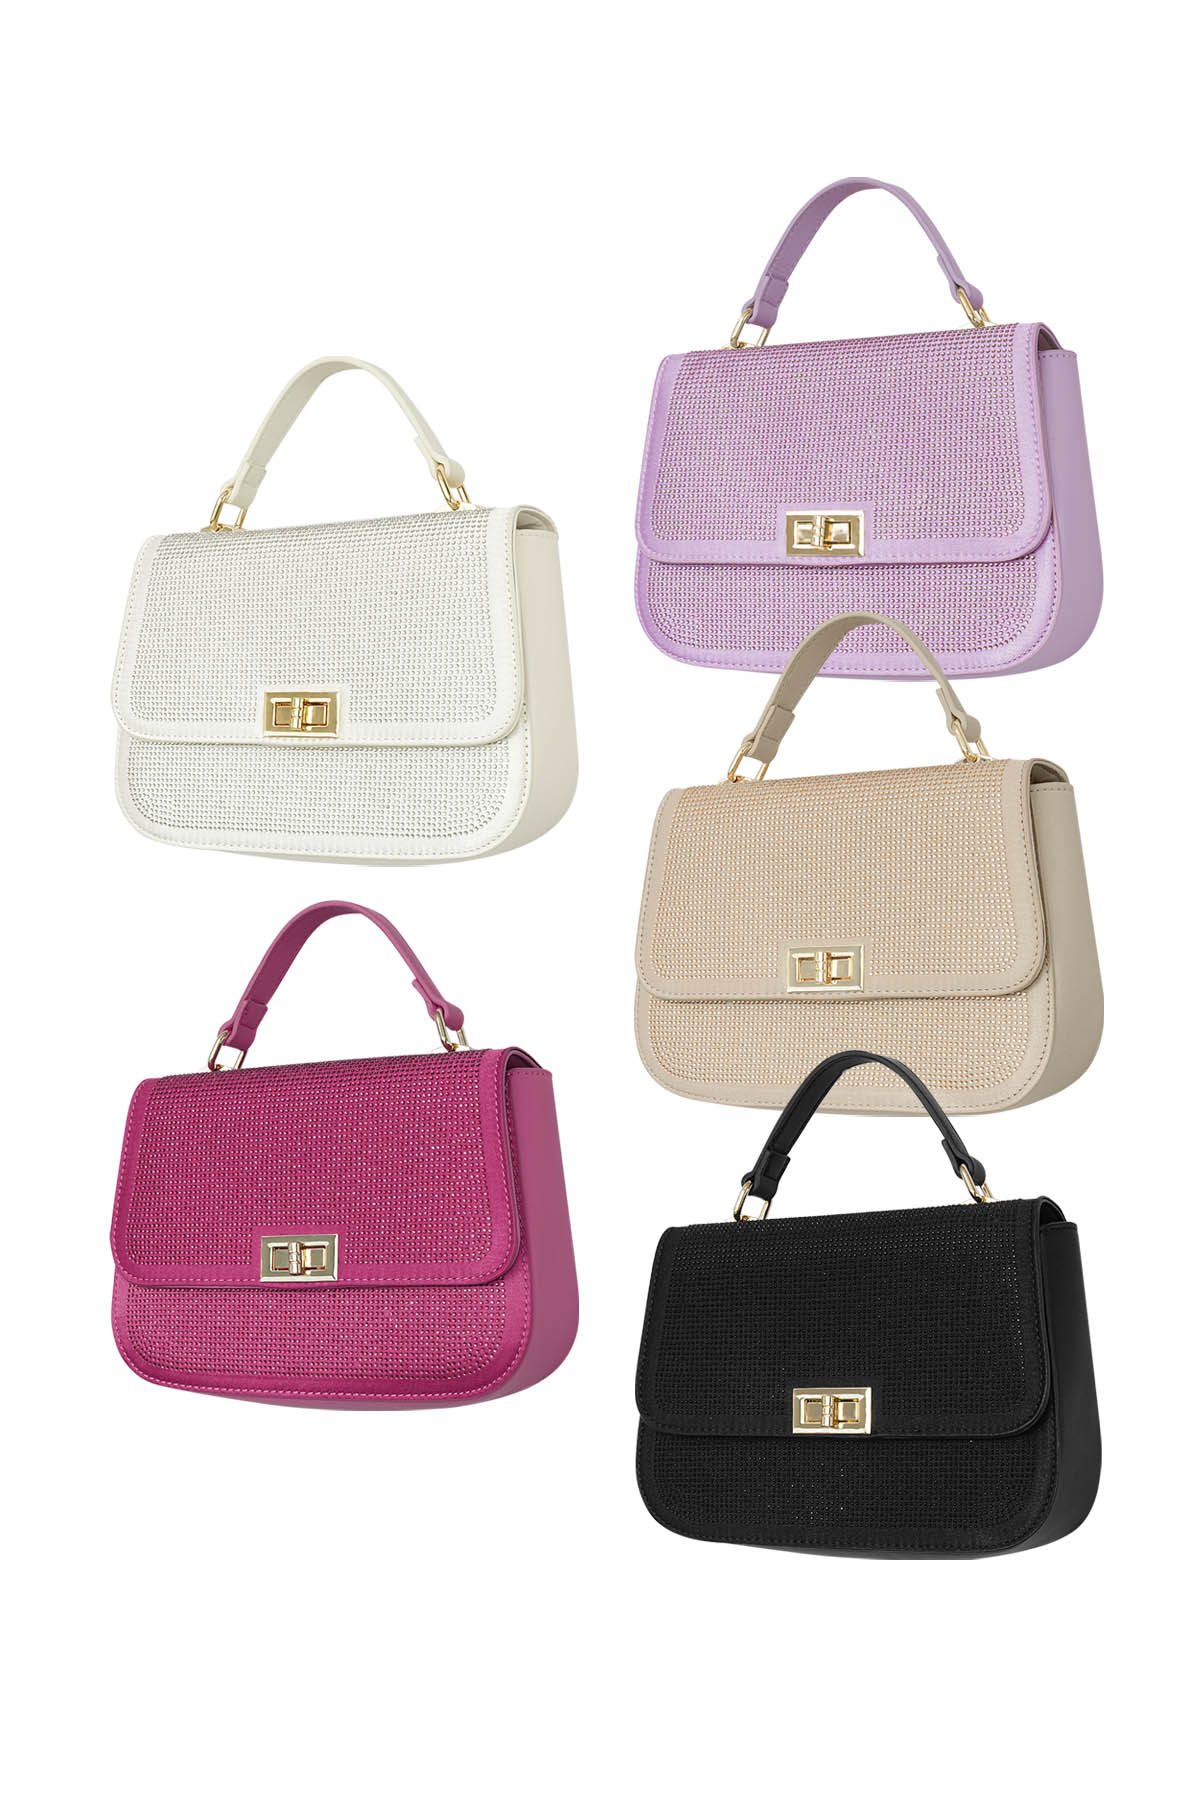 Handbag glamor - purple PU Picture4